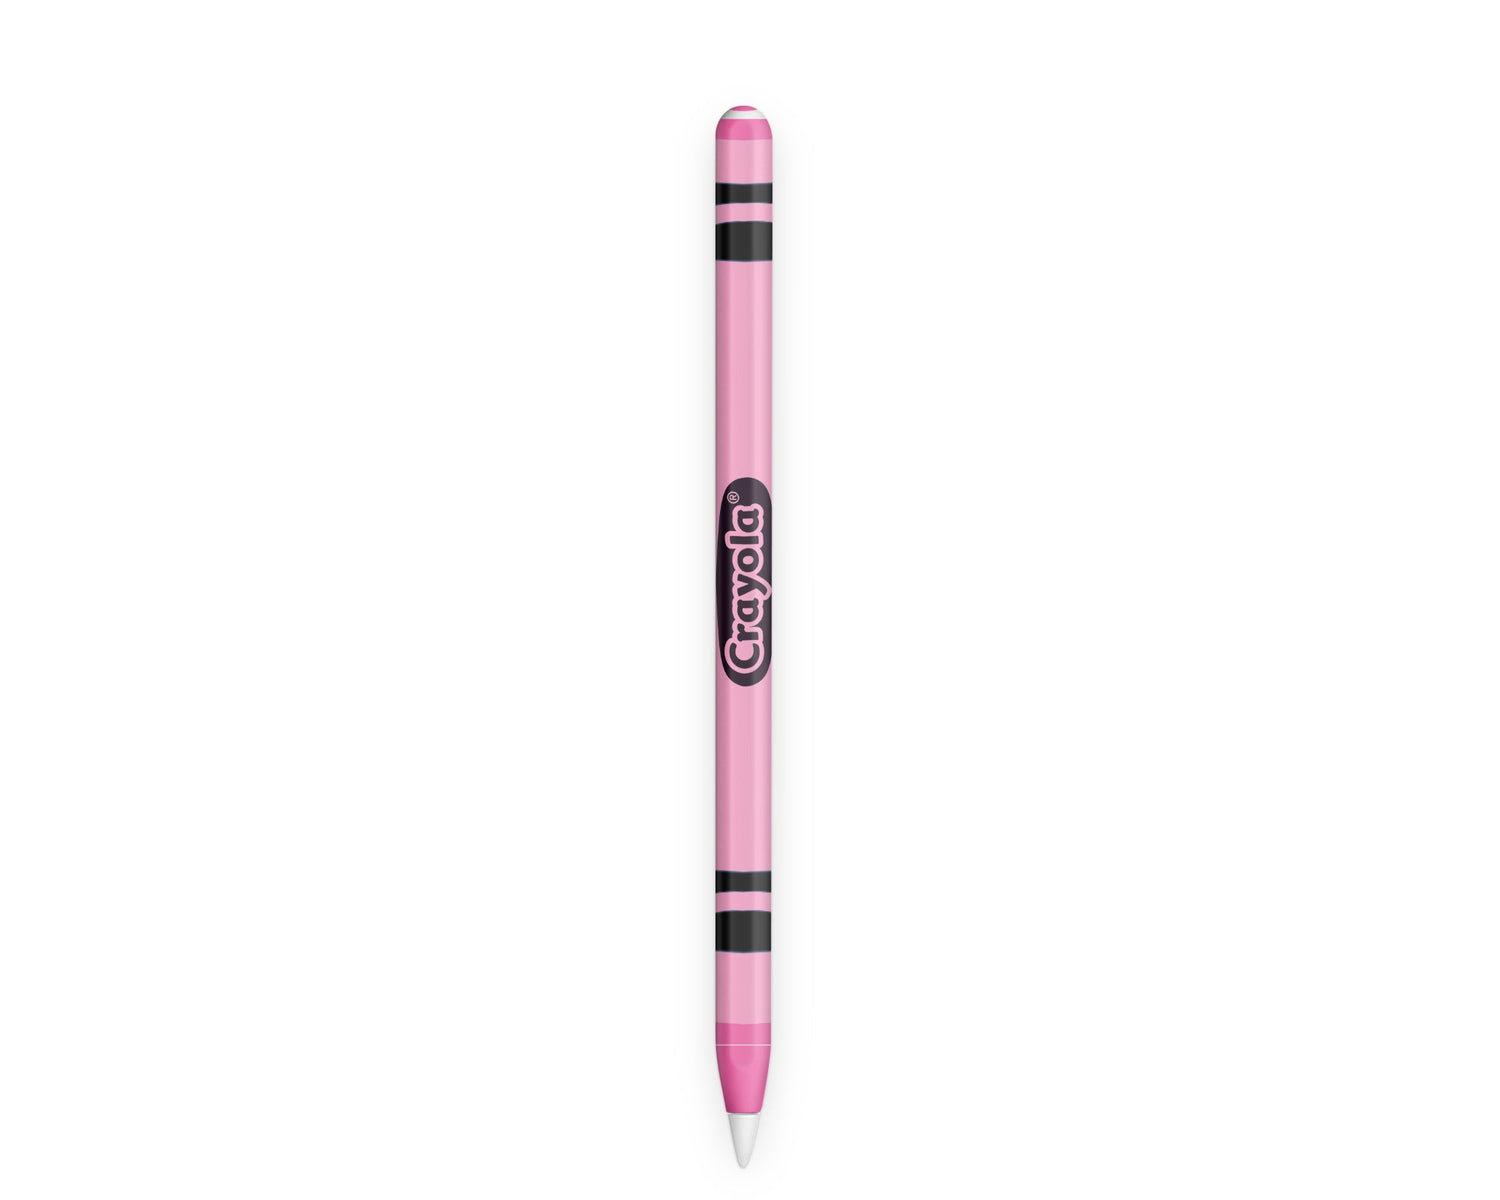 Lux Skins Apple Pencil Crayloa Pink 2nd Generation Skins - Art Crayola Series Skin